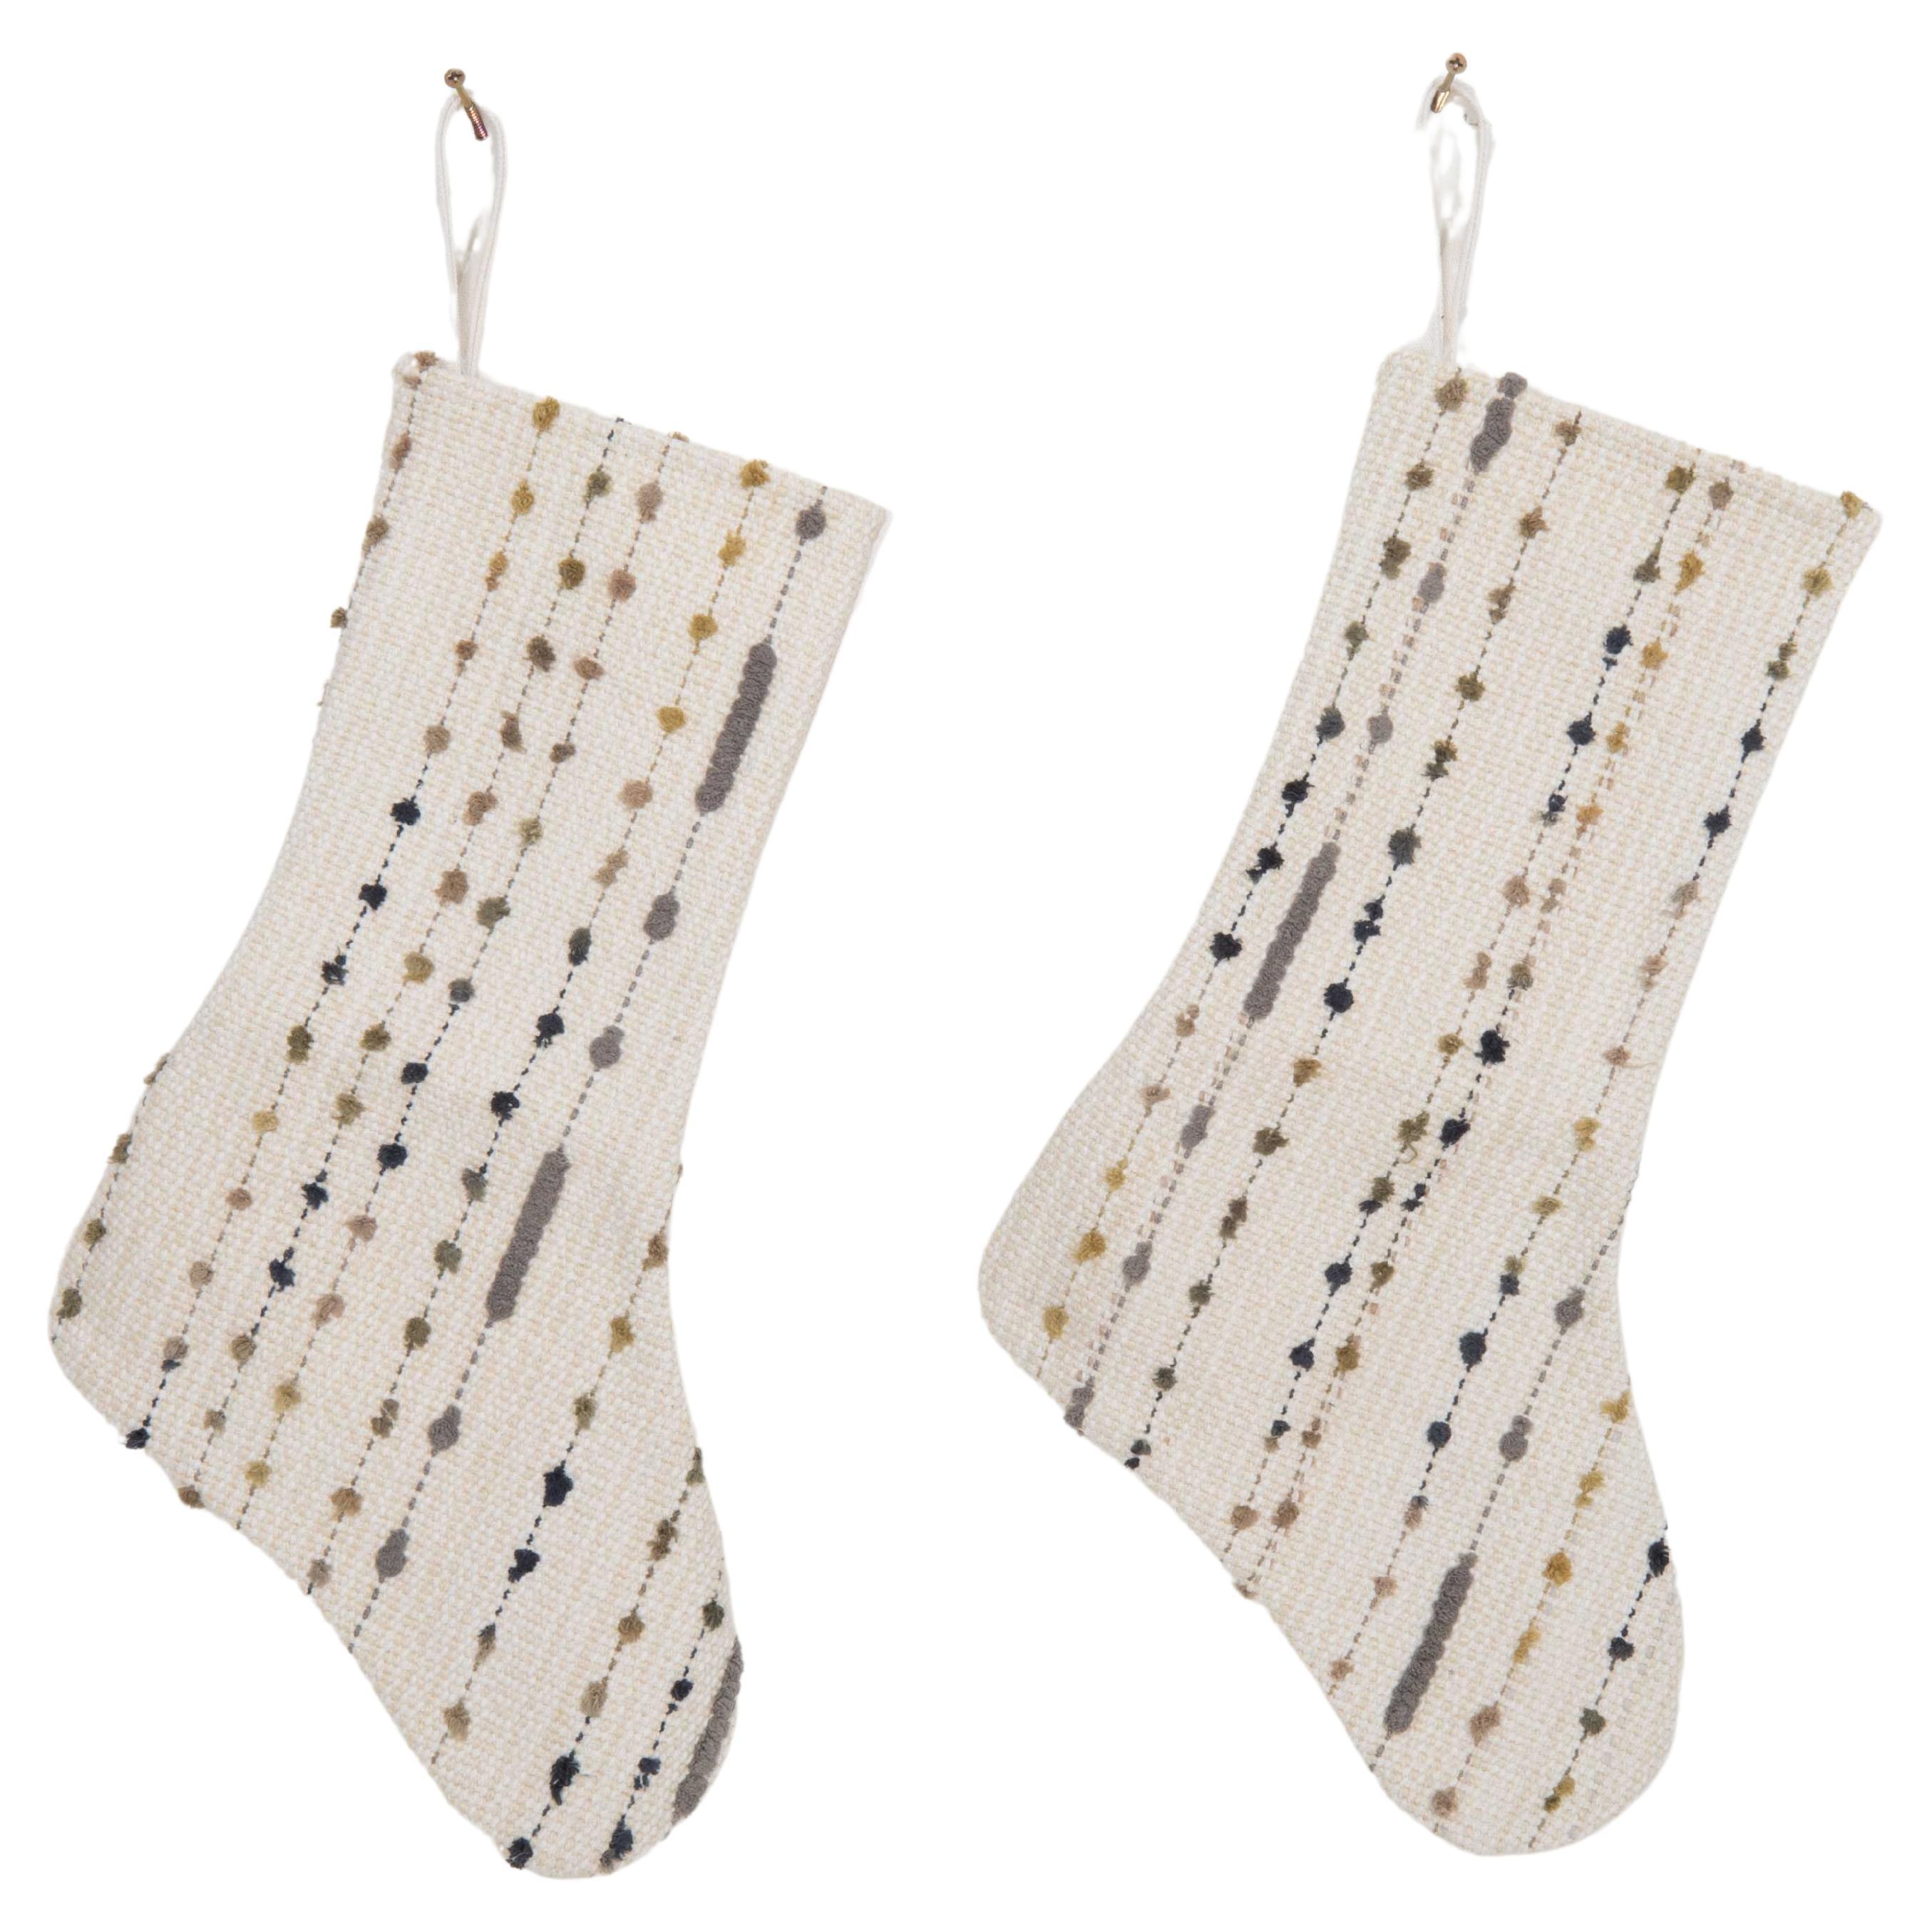 Christmas Stockings Made from Contemporary Anatolian Kilim Fragments